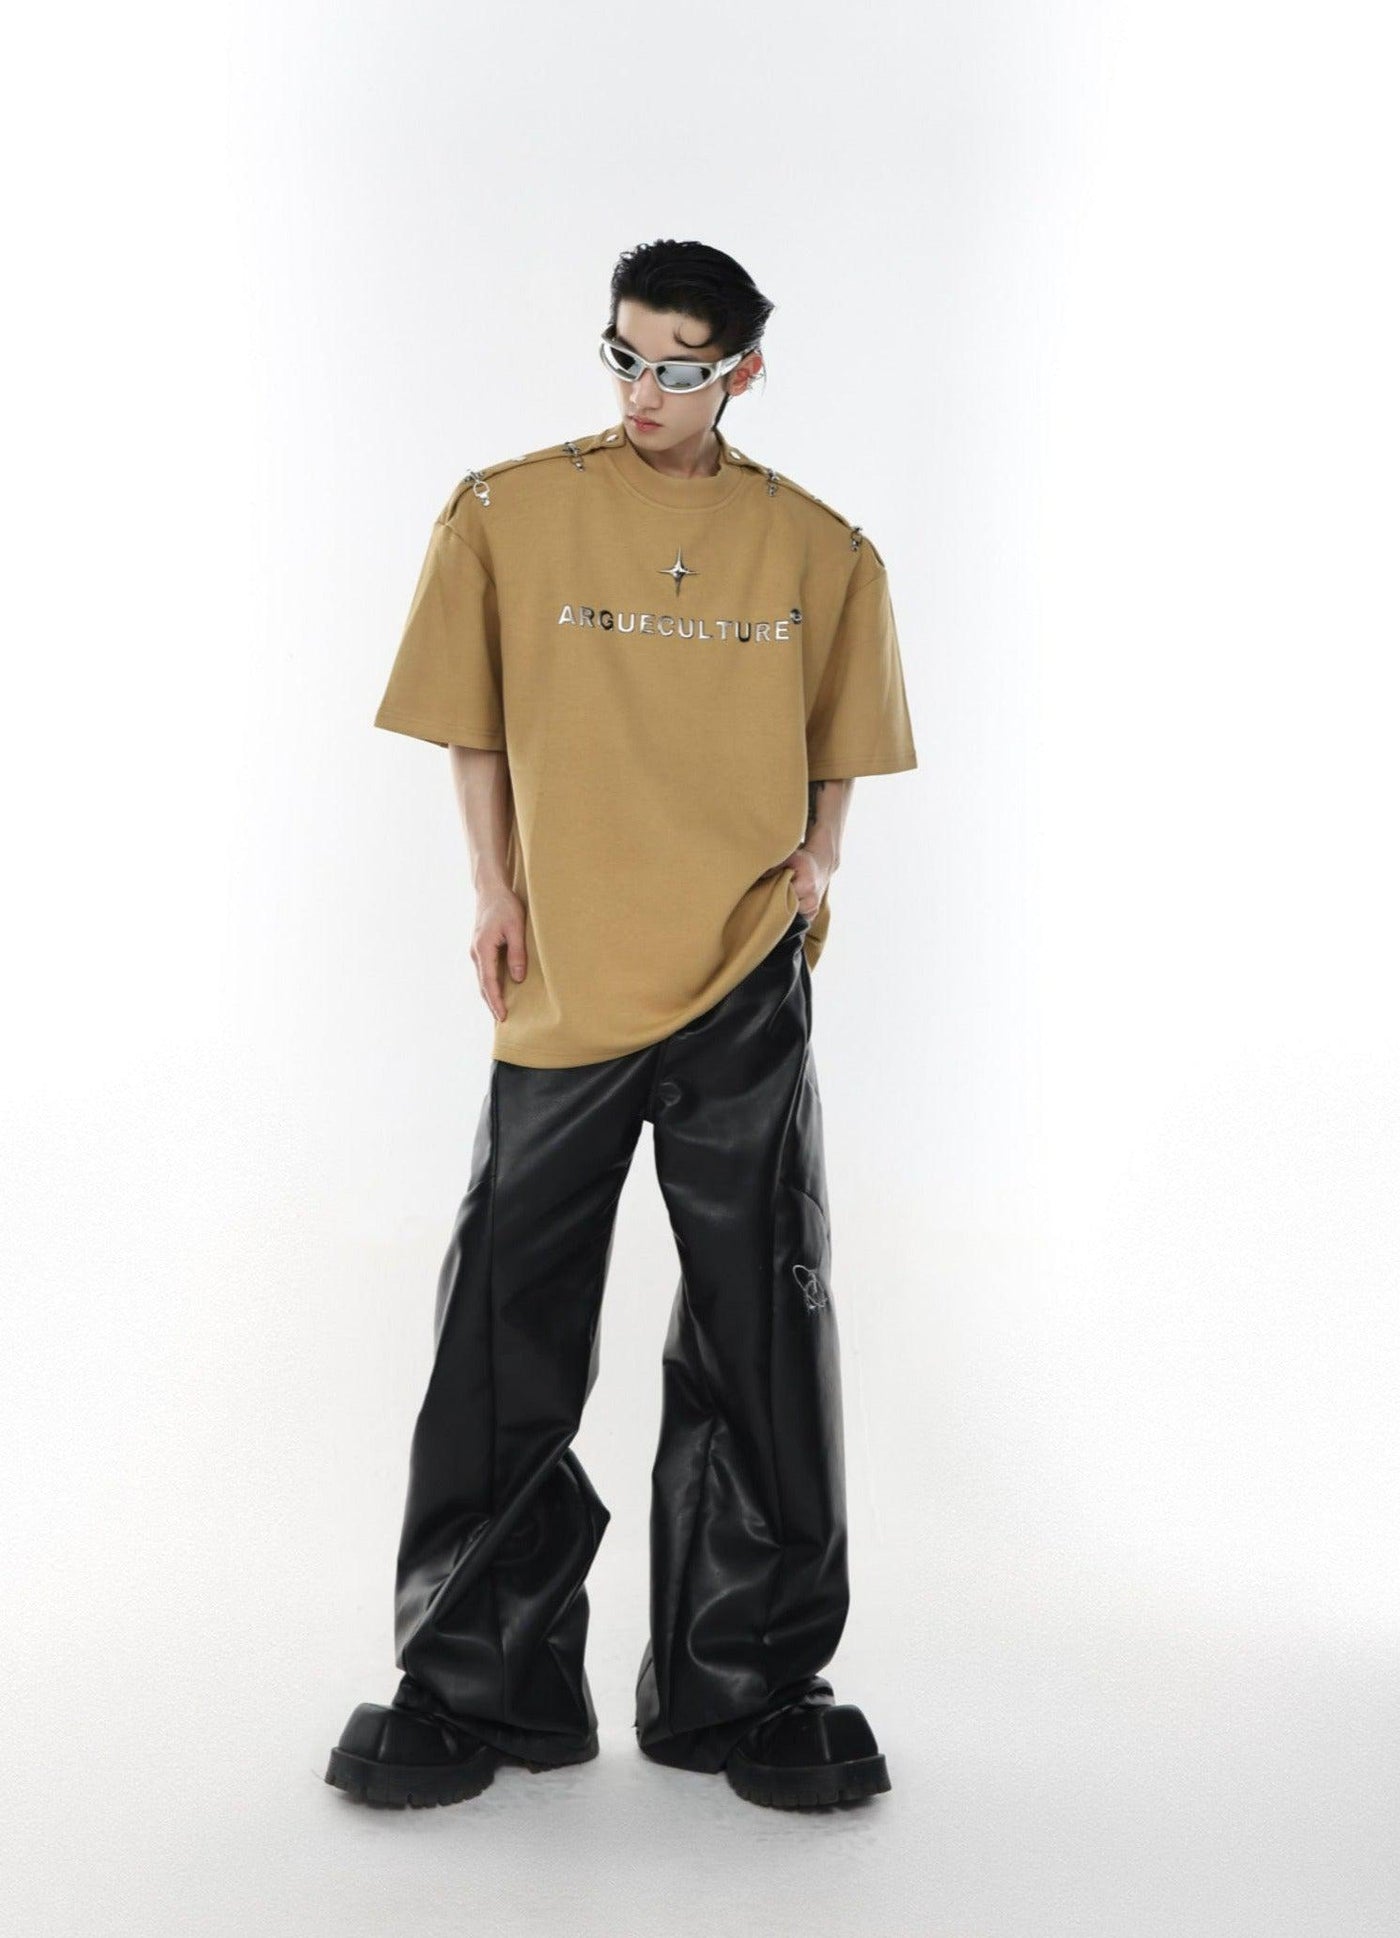 Metal Airplane Buckle T-Shirt Korean Street Fashion T-Shirt By Argue Culture Shop Online at OH Vault